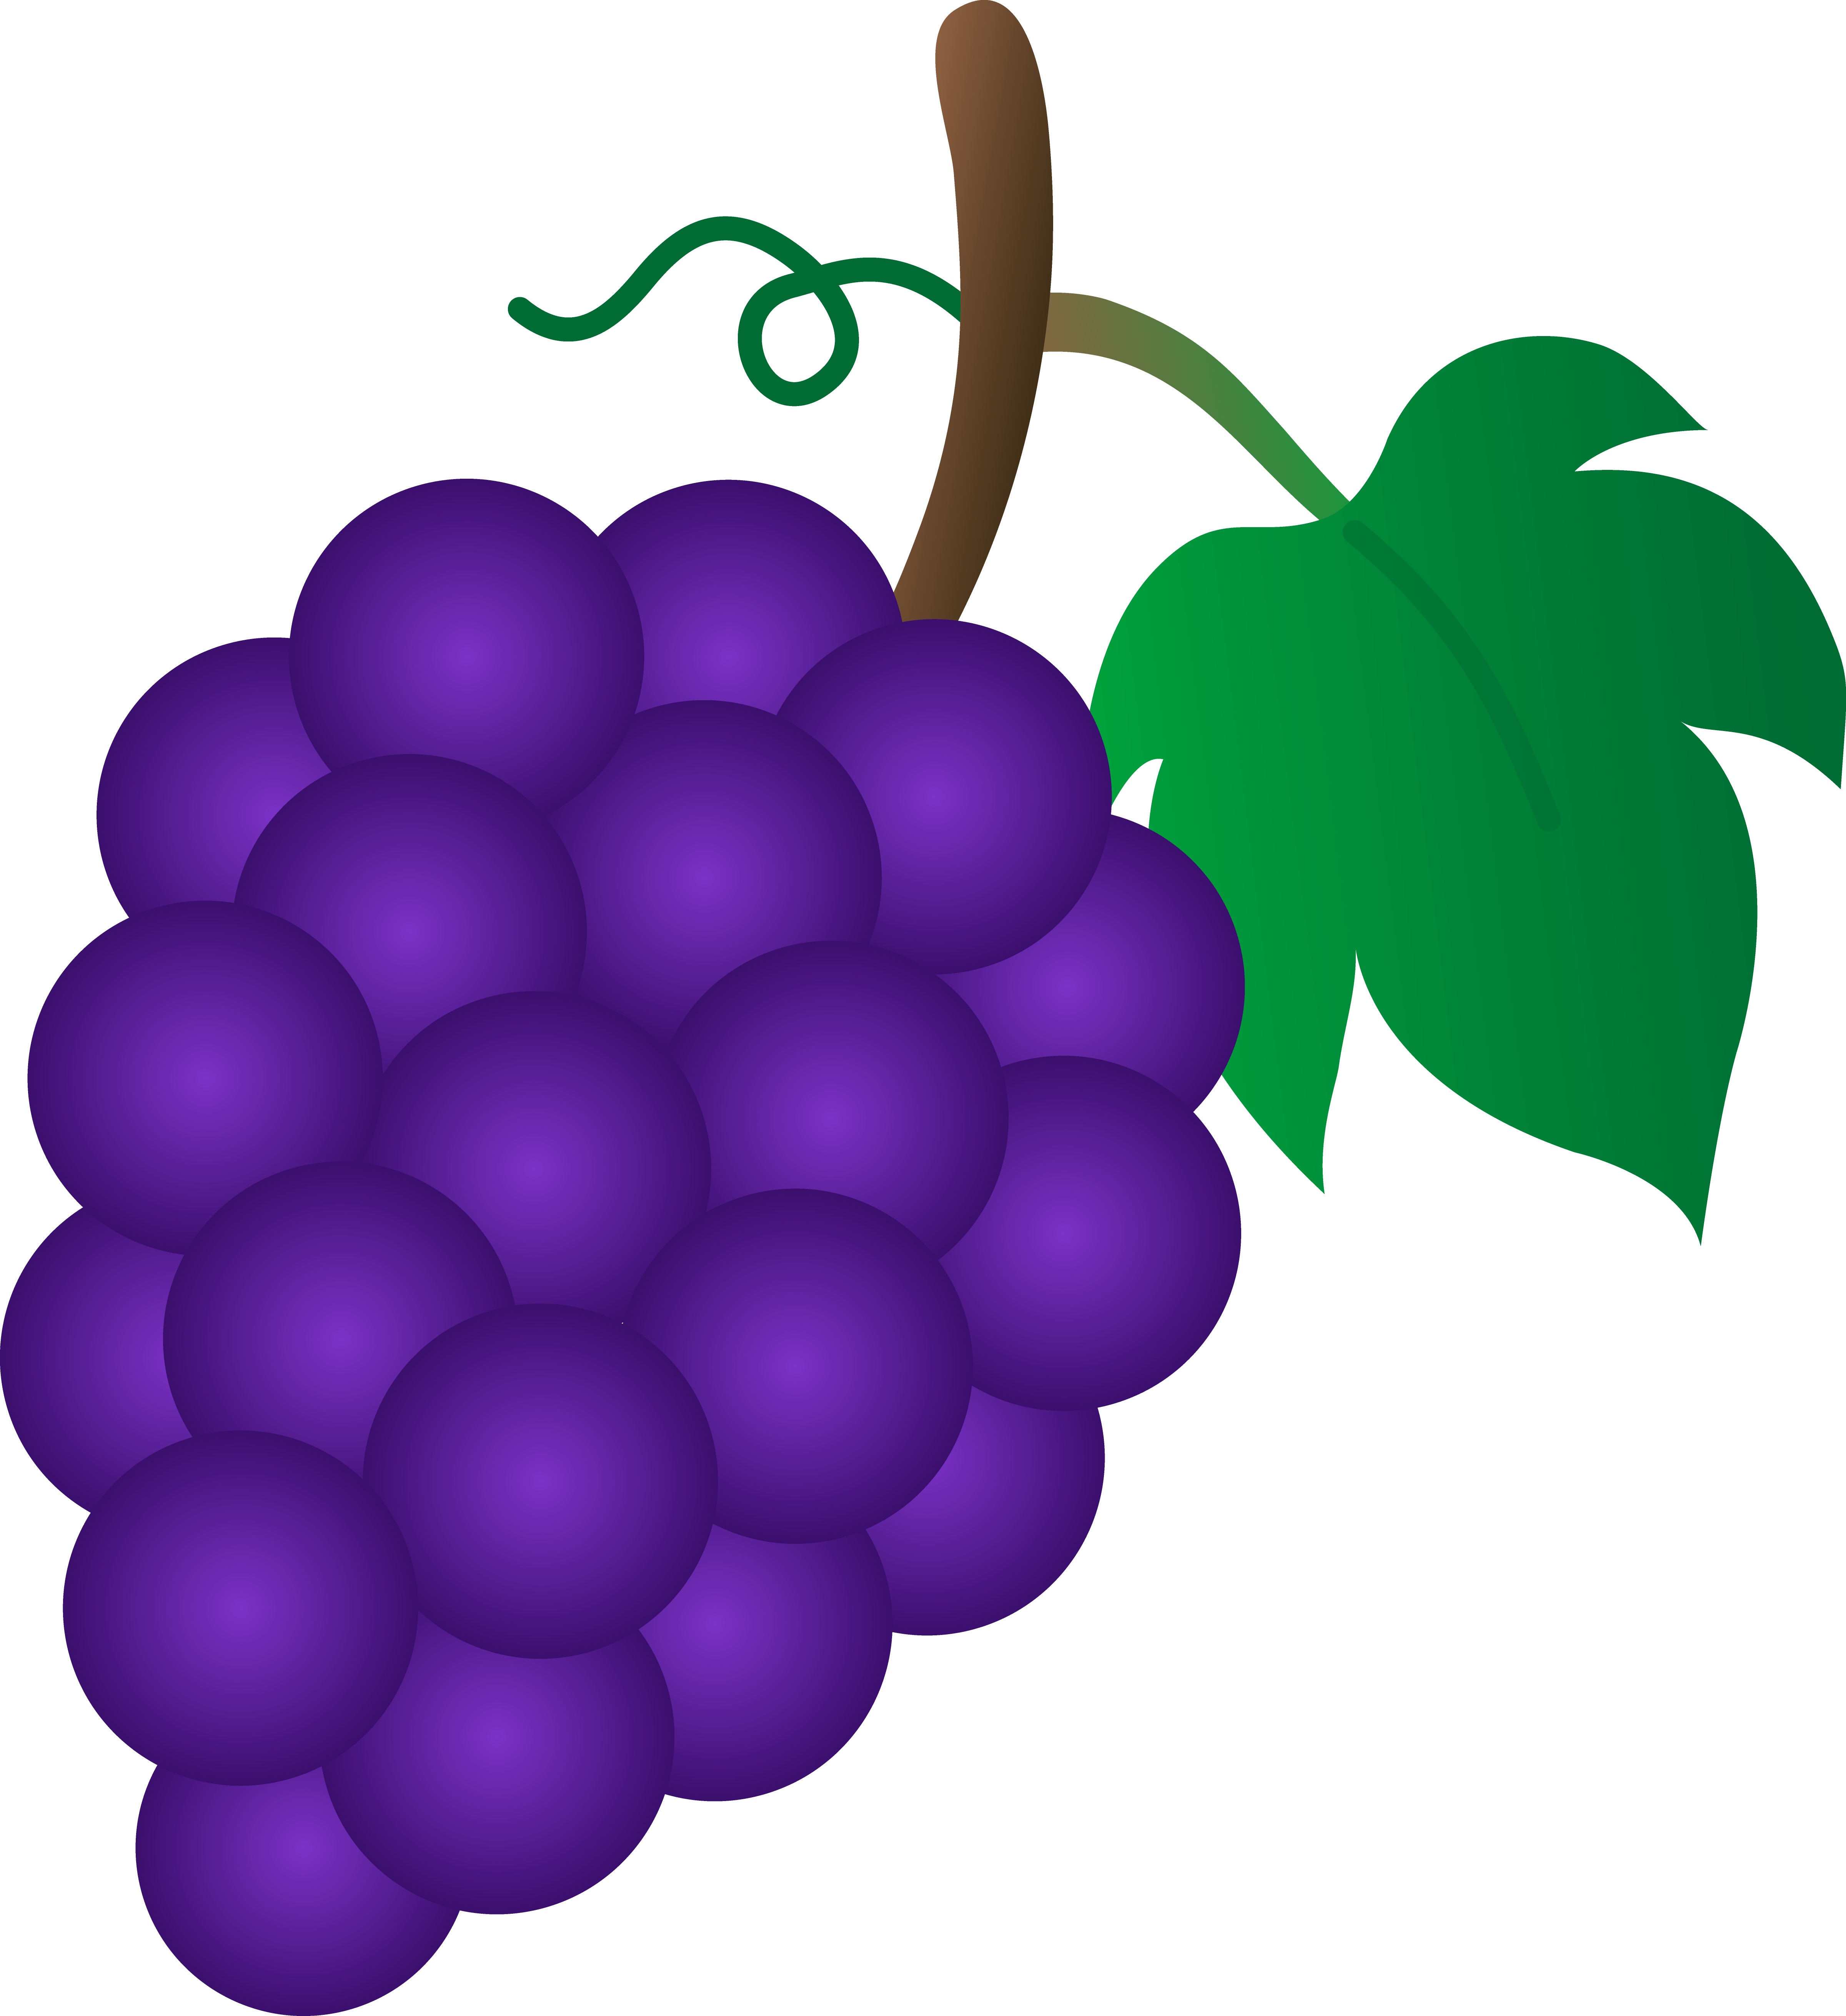 Grape with sunglasses cartoon clipart